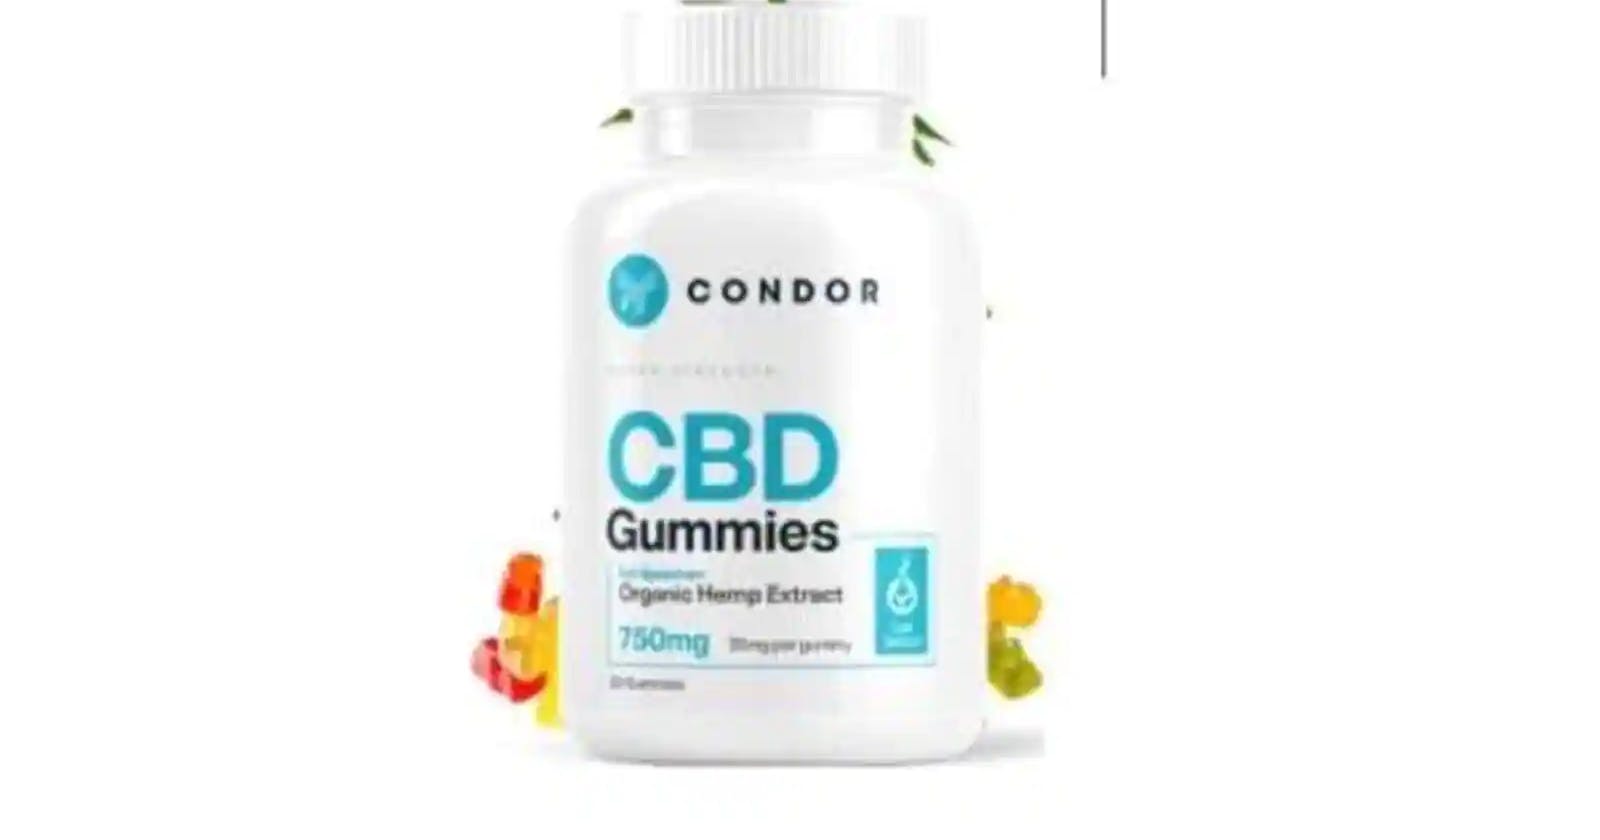 Condor CBD Gummies Price, Reviews, Ingredients & Effect